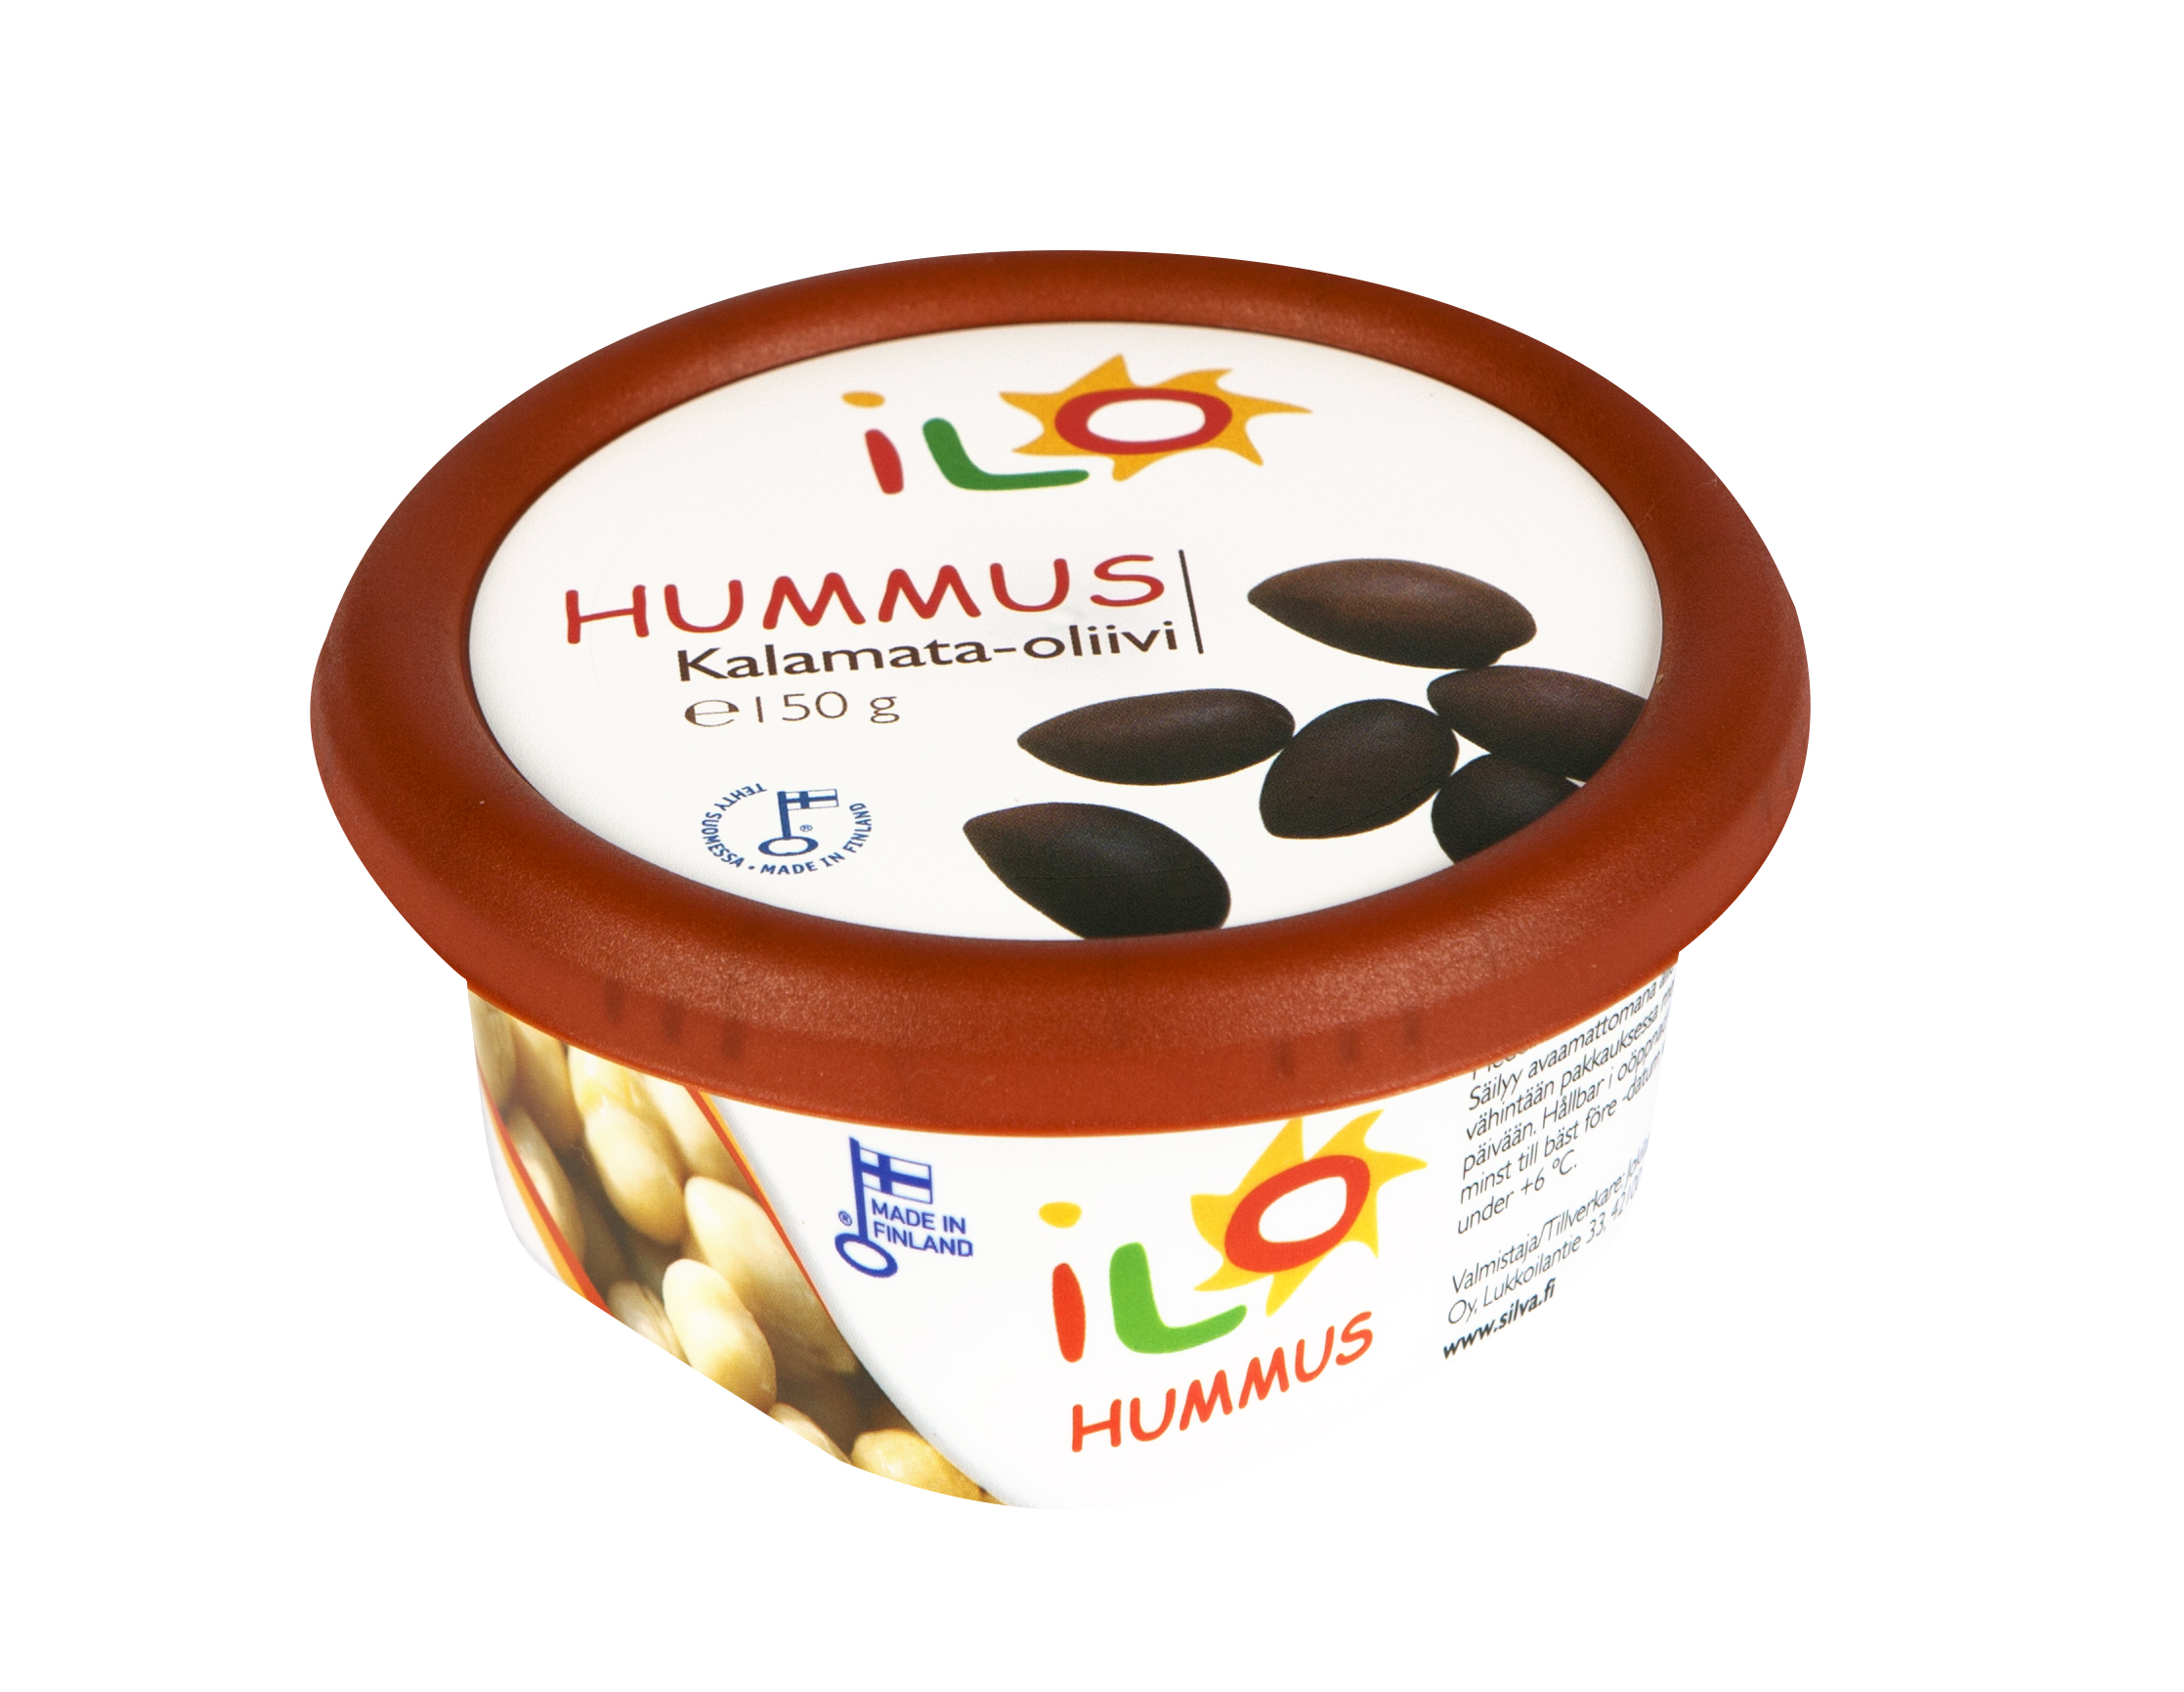 ILO Hummus Kalamata-oliivi